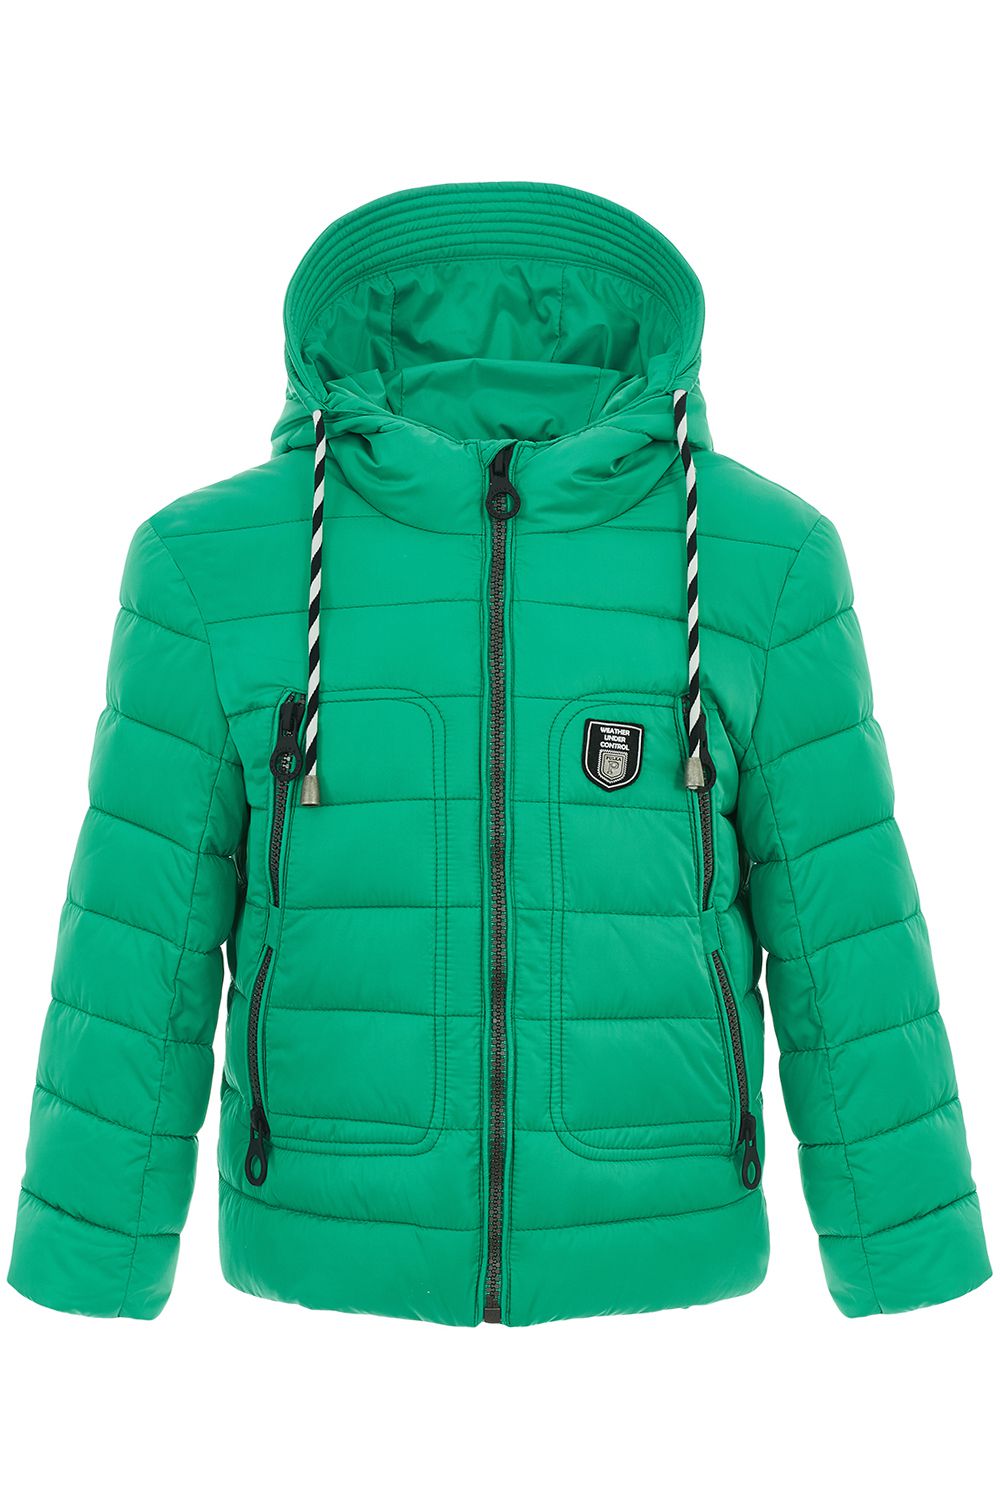 Куртка Pulka, размер 110, цвет зеленый PUFSB-816-10113-600 - фото 1